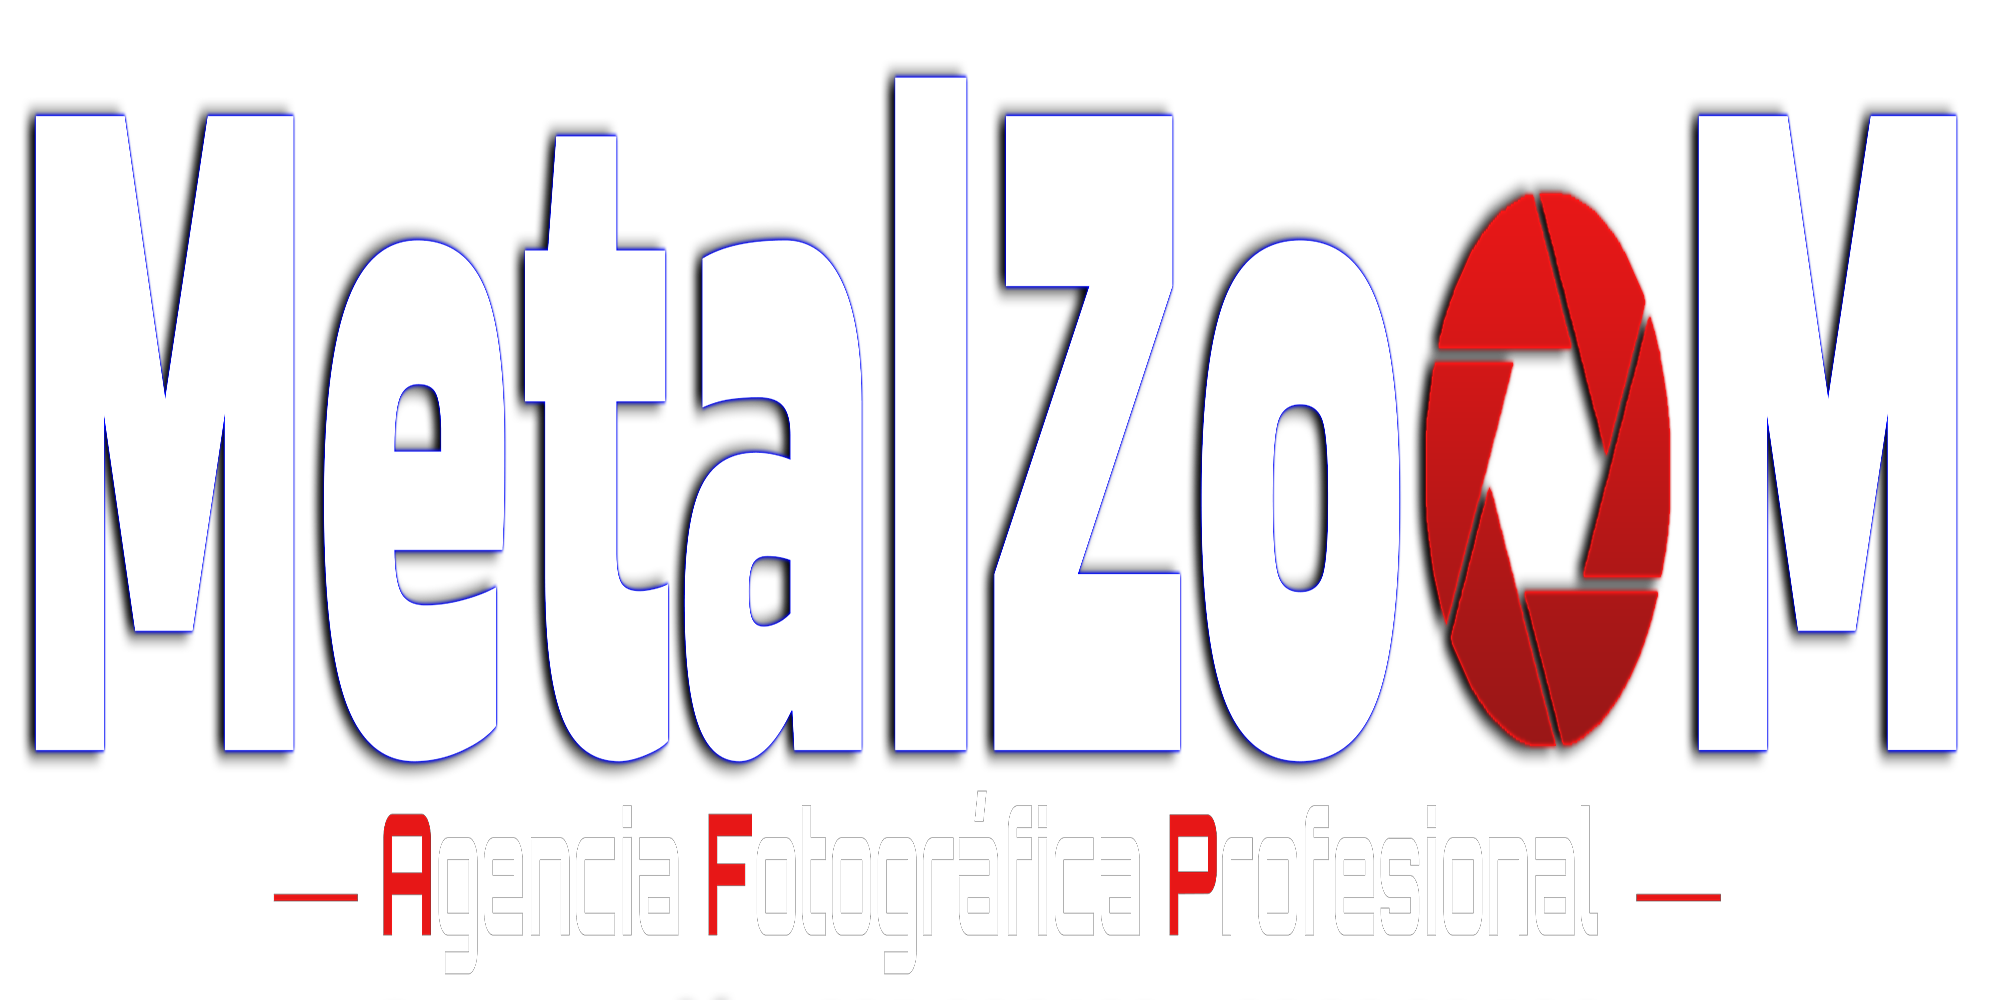 METALZOOM-Agencia Fotografica Profesional